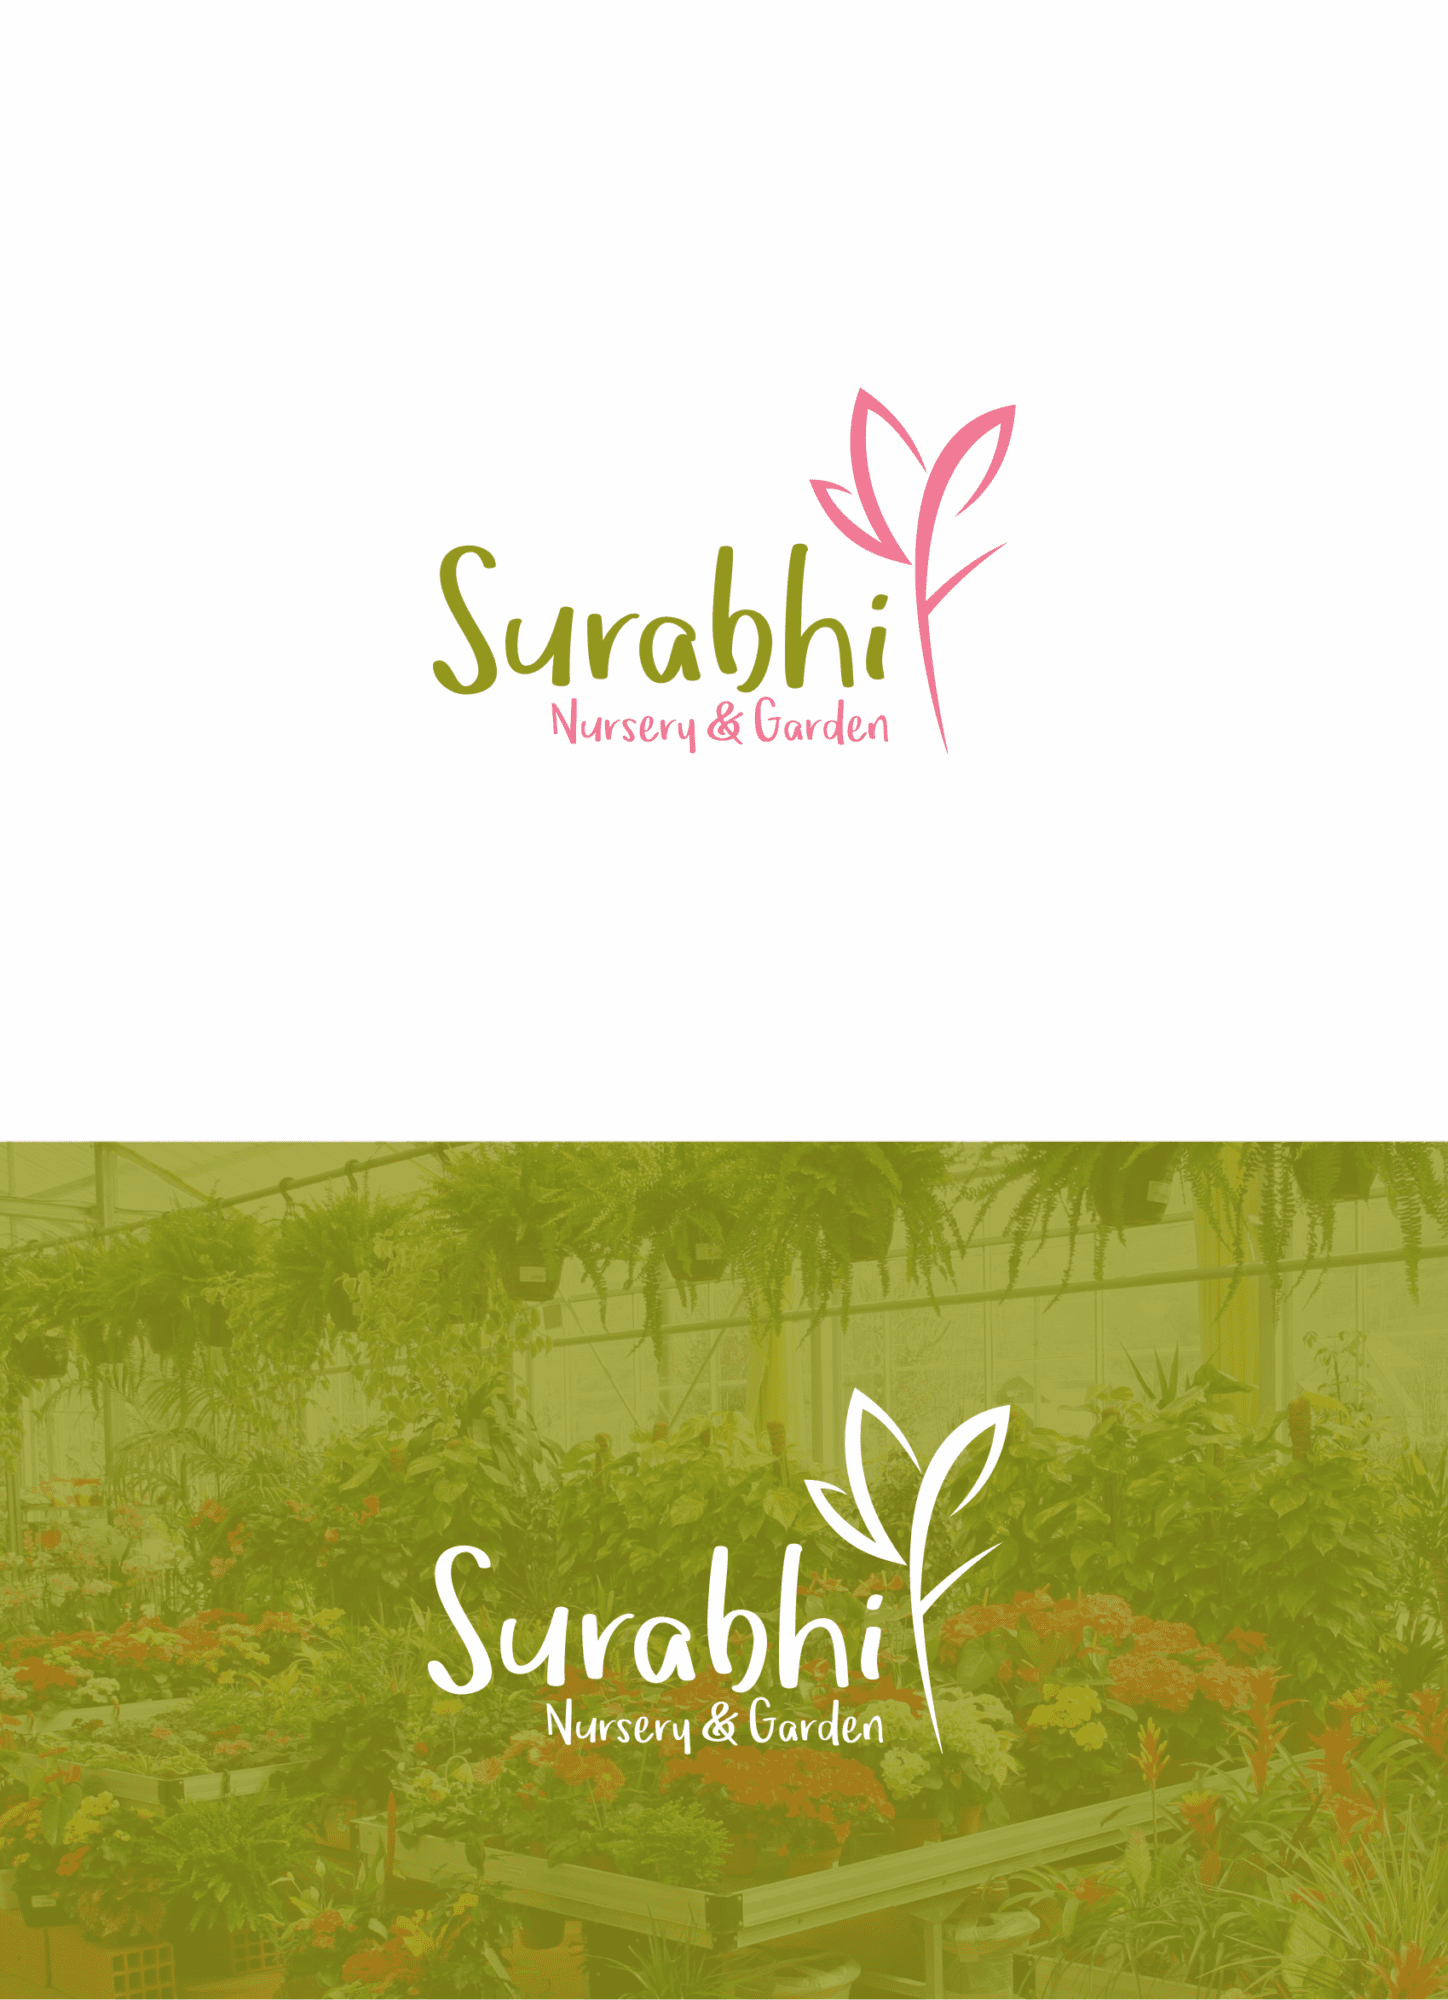 Surabhi Nursery and Garden Logo Branding & Packaging Design in Coimbatore by Creative Prints thecreativeprints